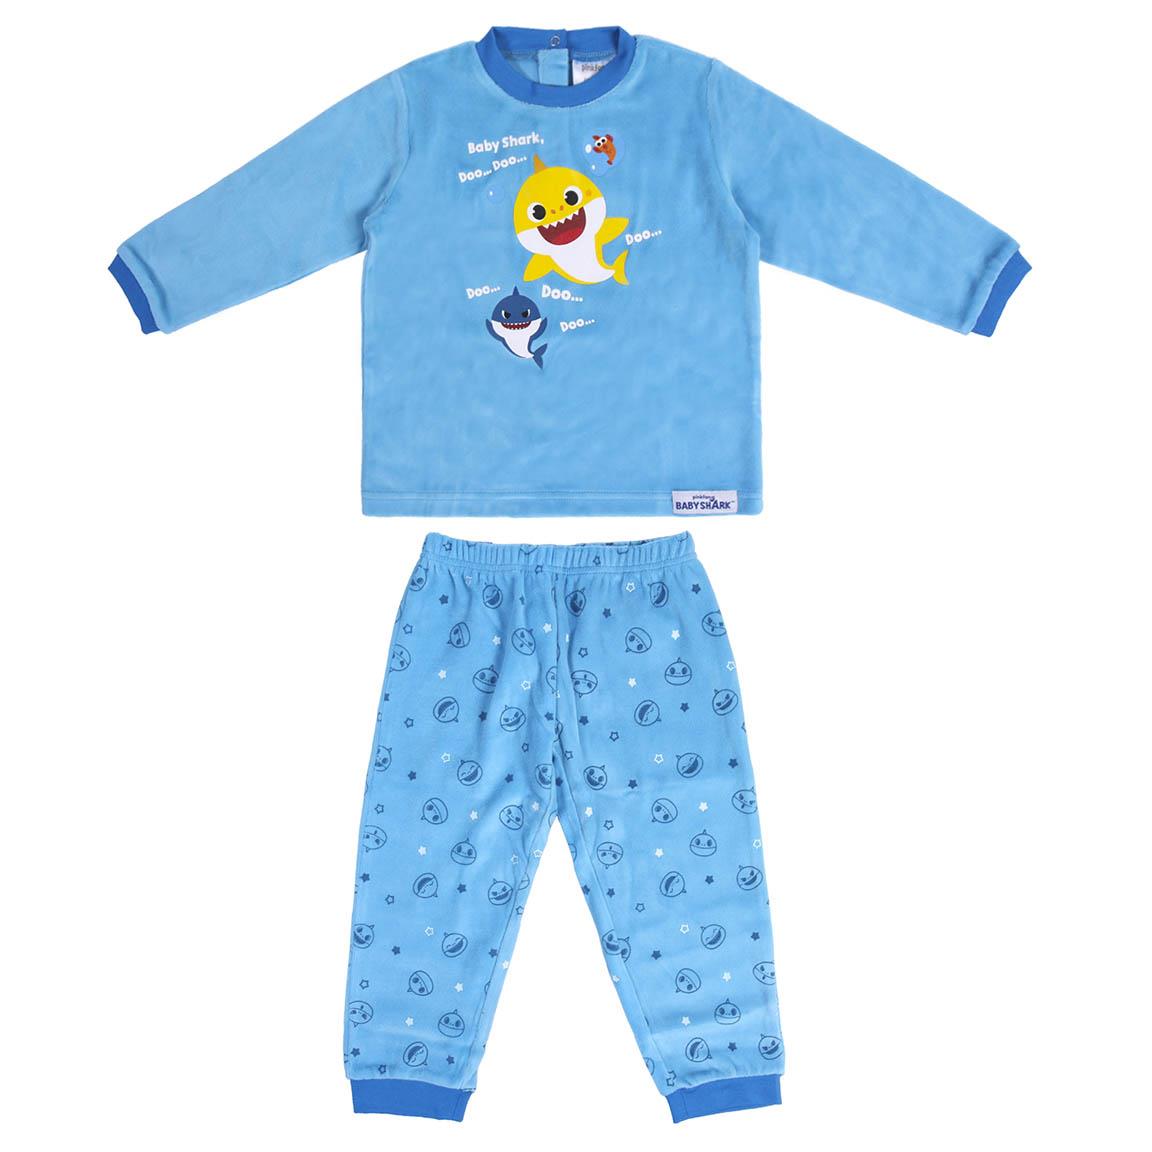   Pijama baby shark 2200006325 